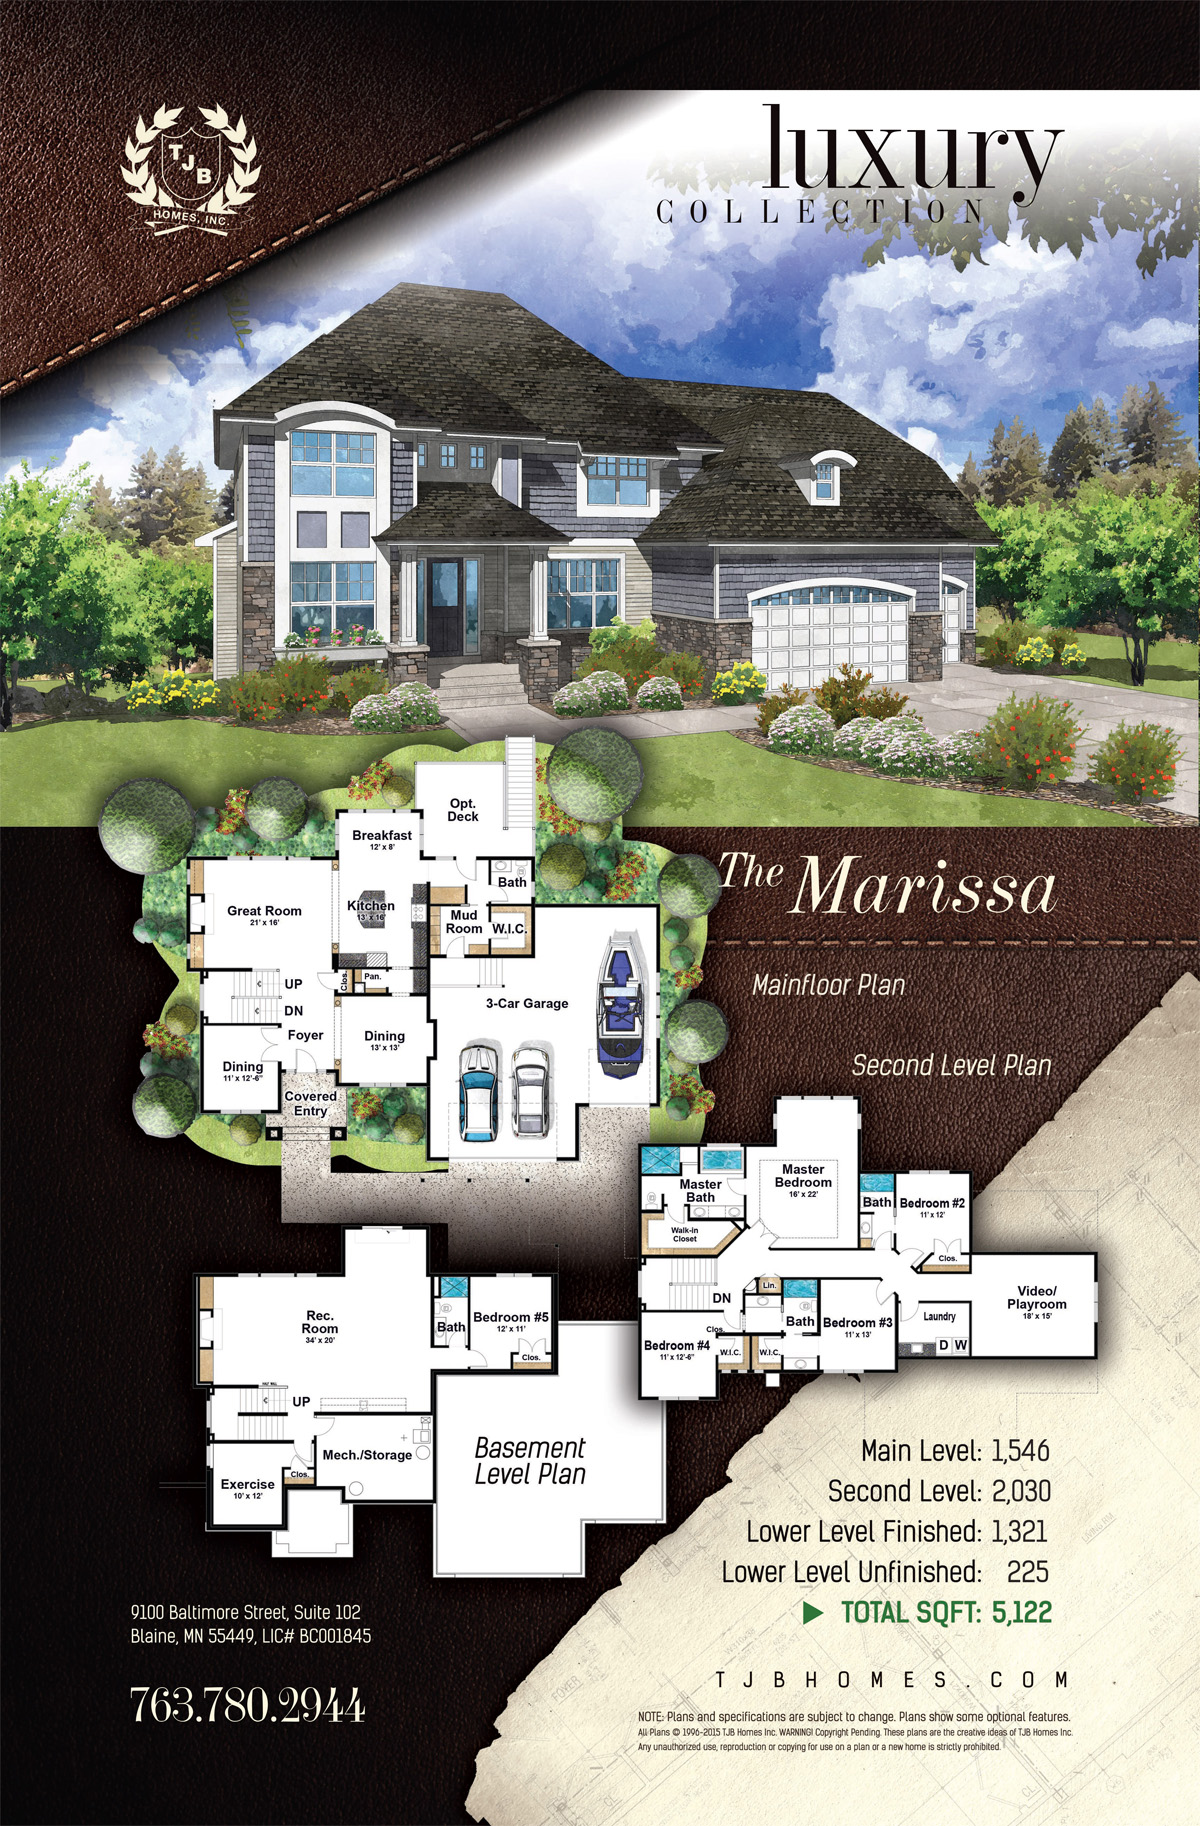 The Marissa Home Plan